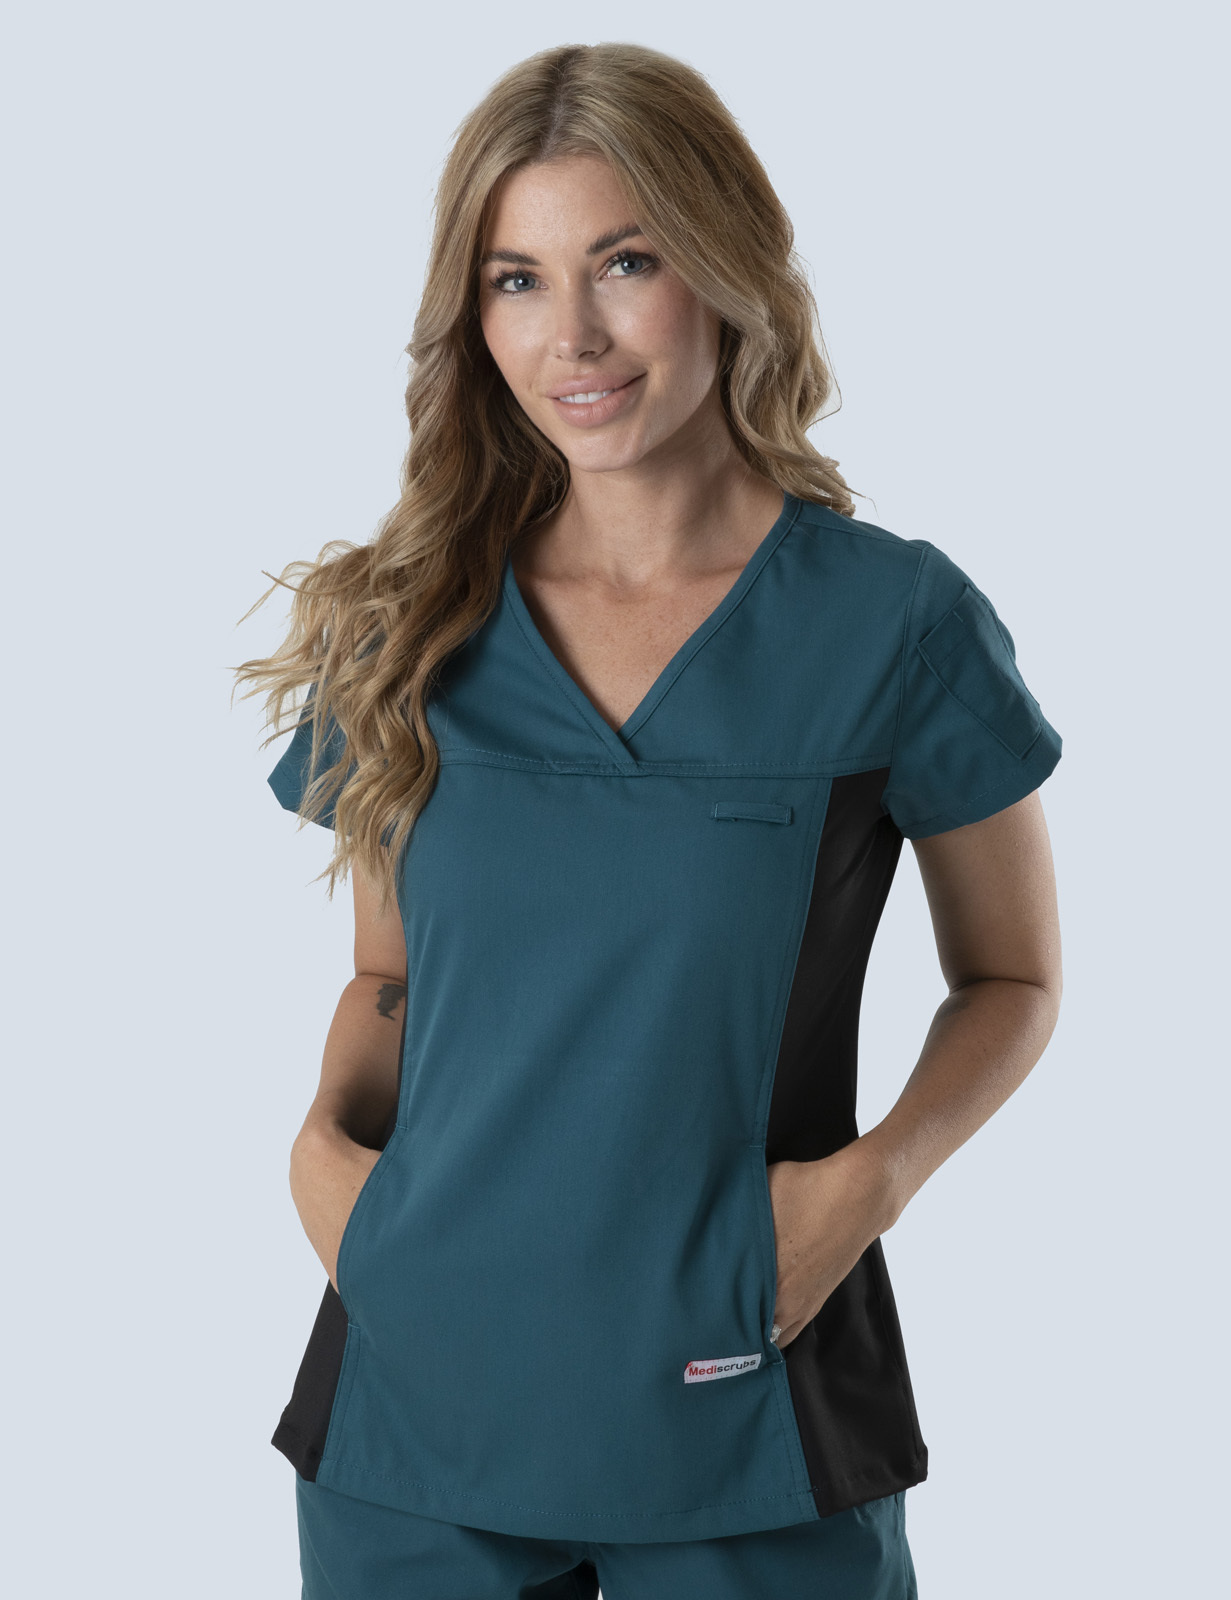 Ashmore Retreat Carer Uniform Top Only Bundle - (Women's Fit Spandex in Caribbean incl Logo) 